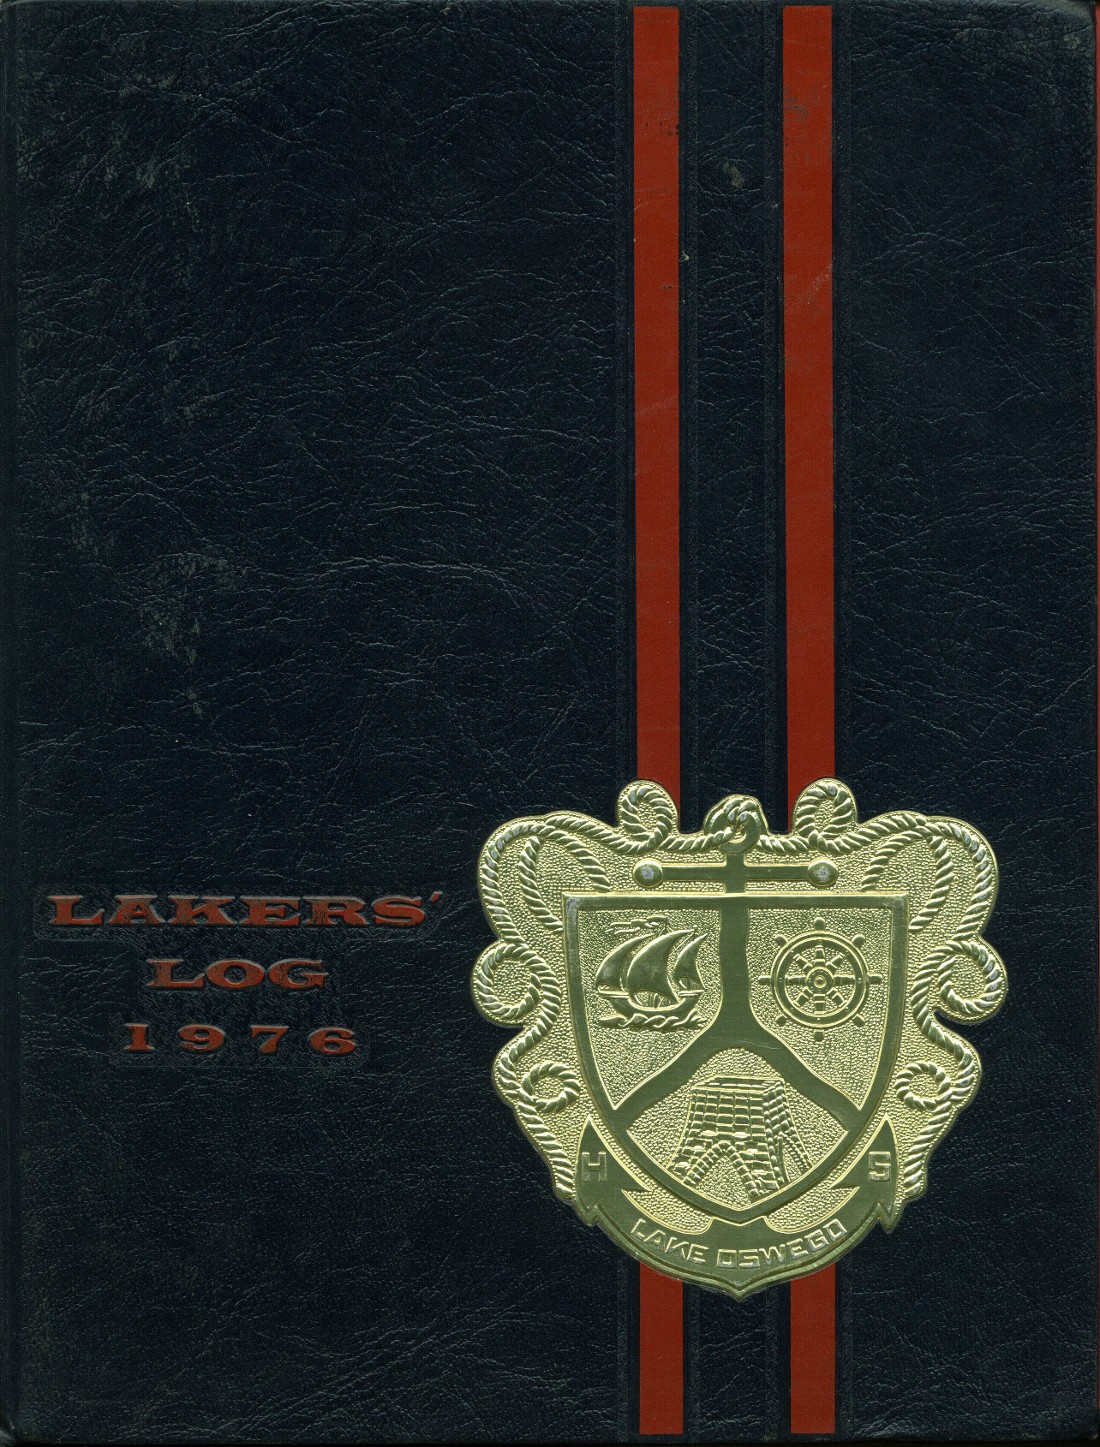 1976 yearbook from Lake Oswego High School from Lake oswego, Oregon